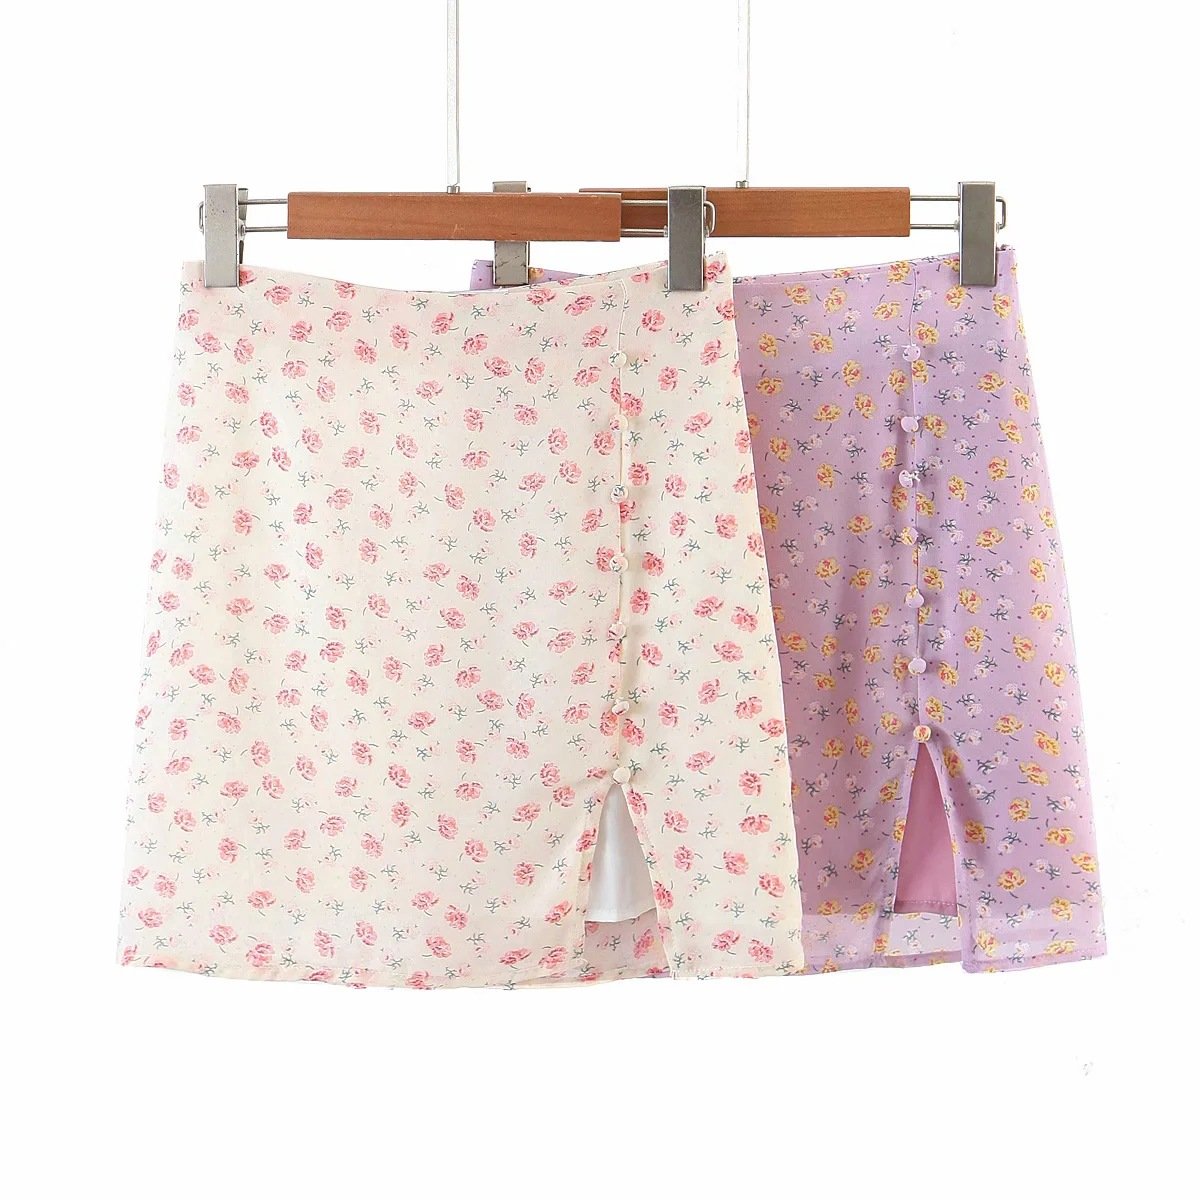 Floral Printed Sexy Split Short Skirt